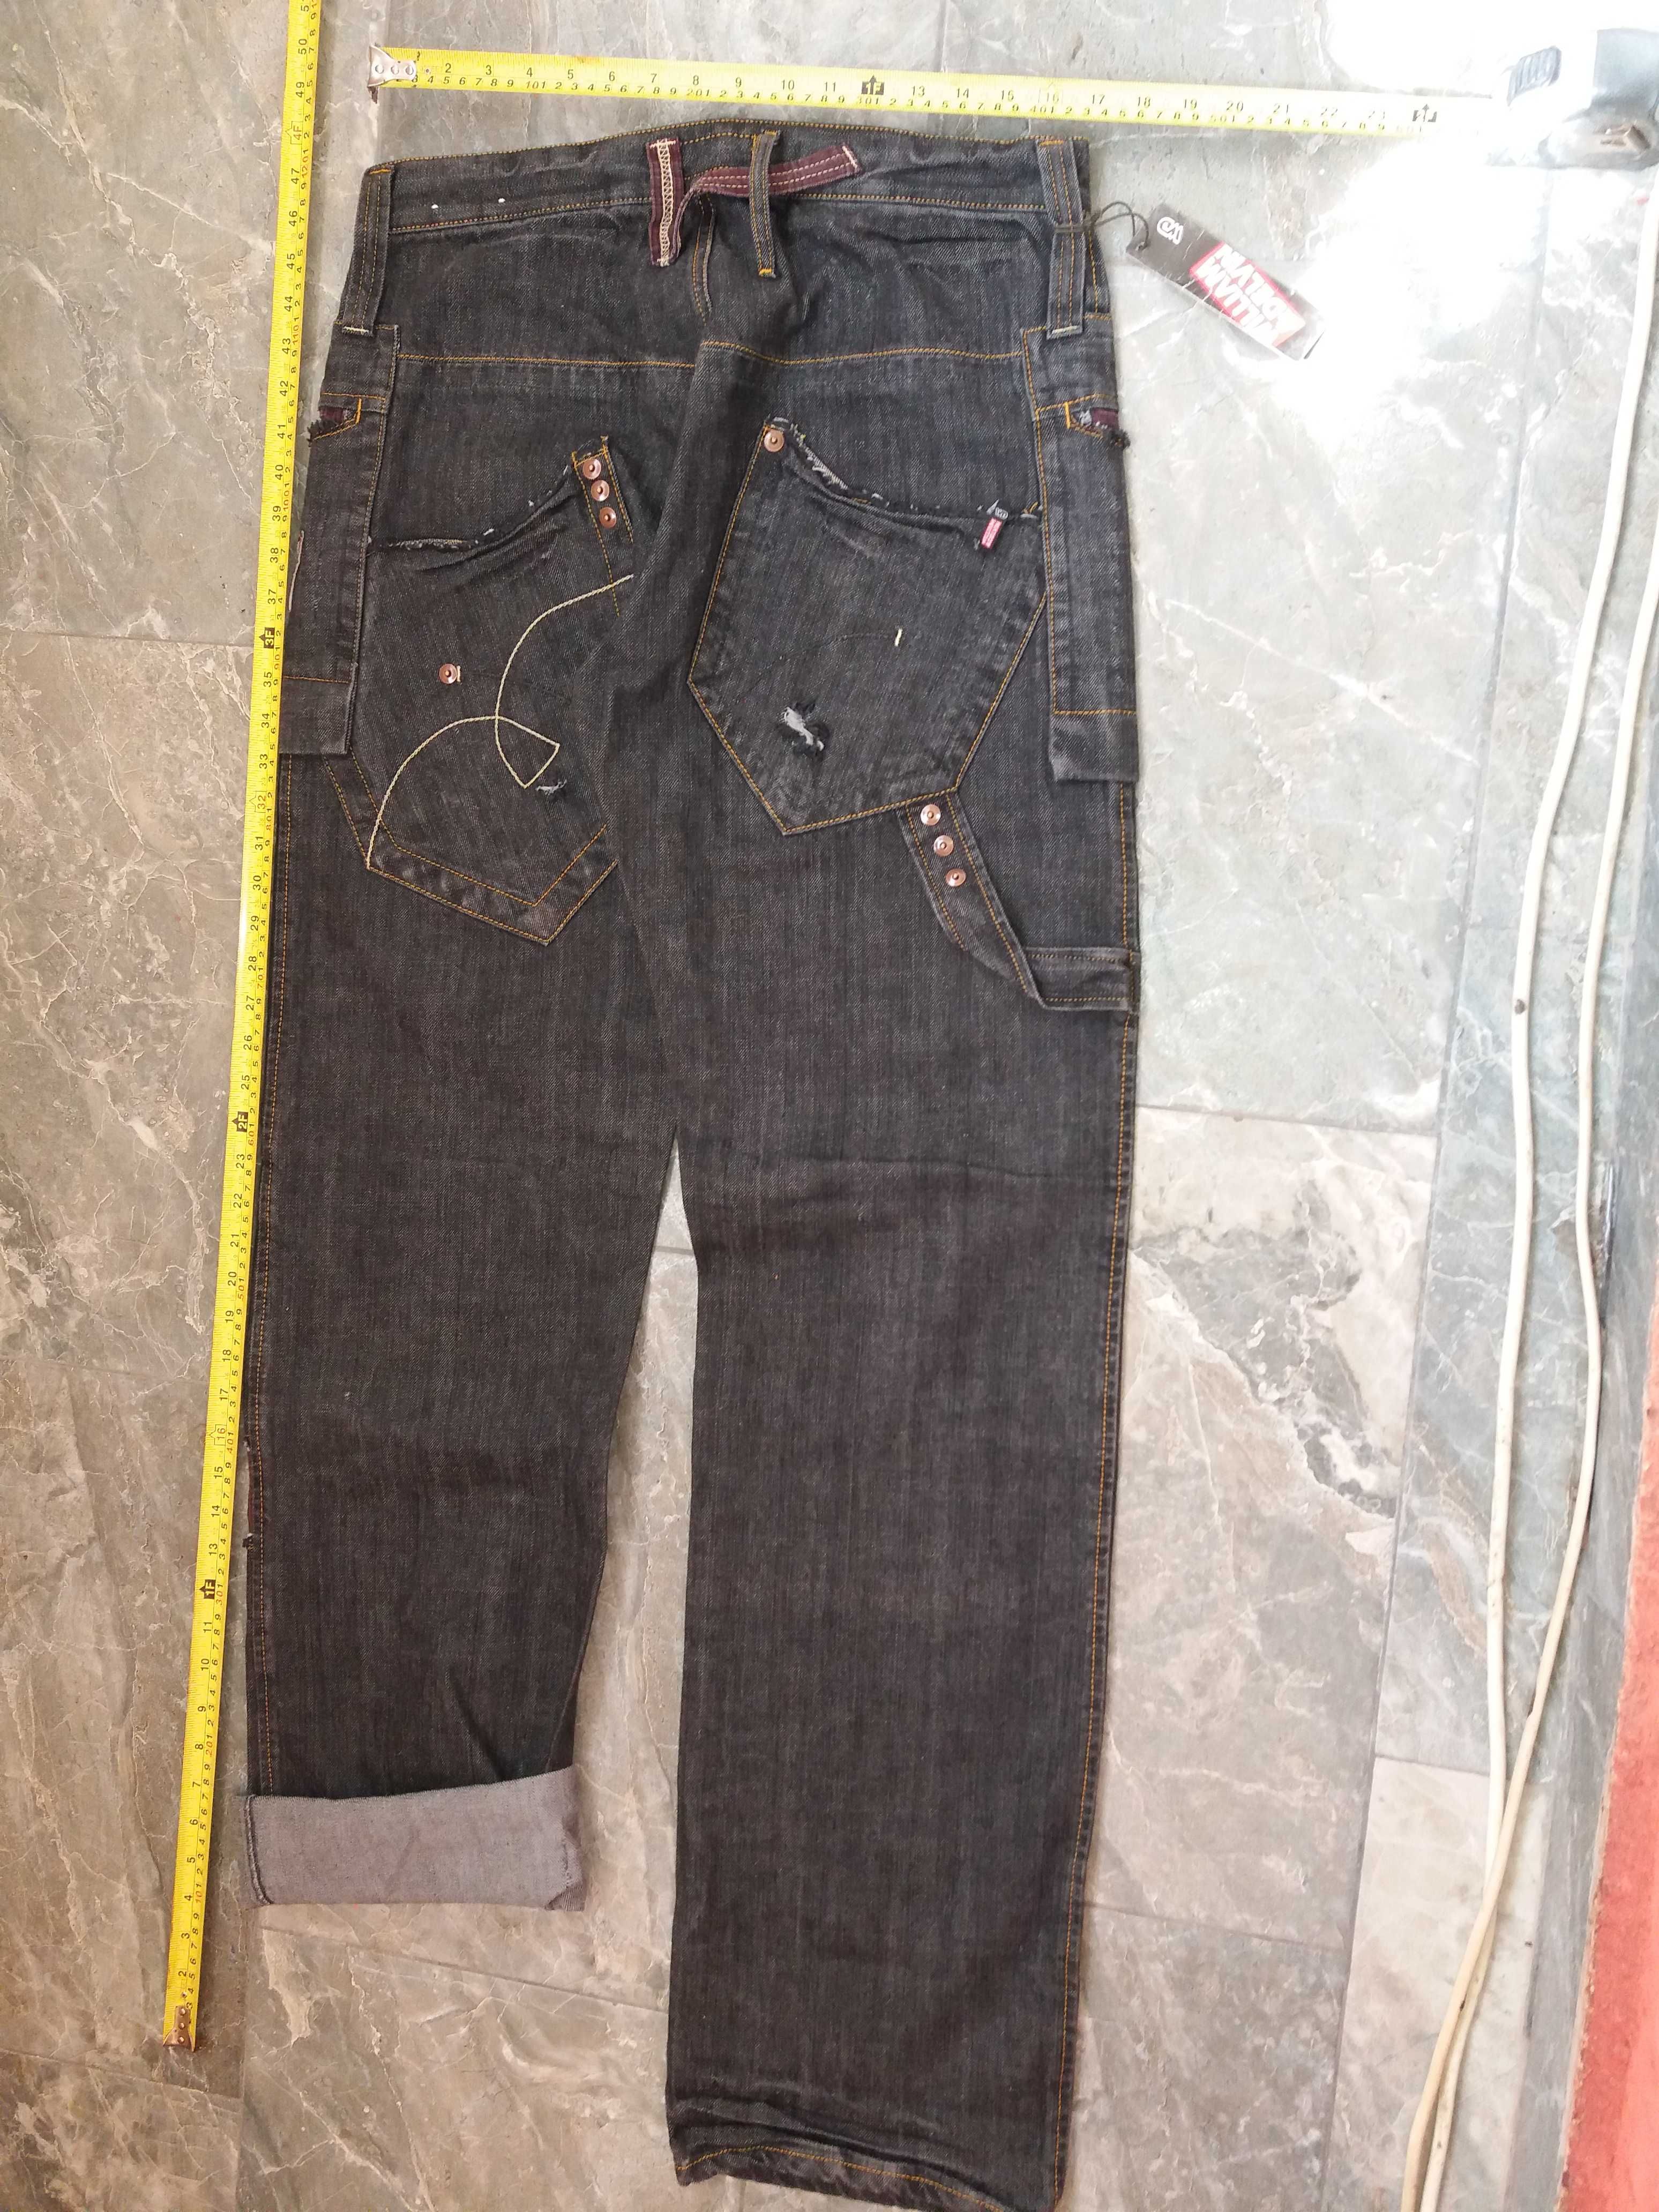 Pantaloni blugi SMF 104cm/80cm. Pret 20 lei.